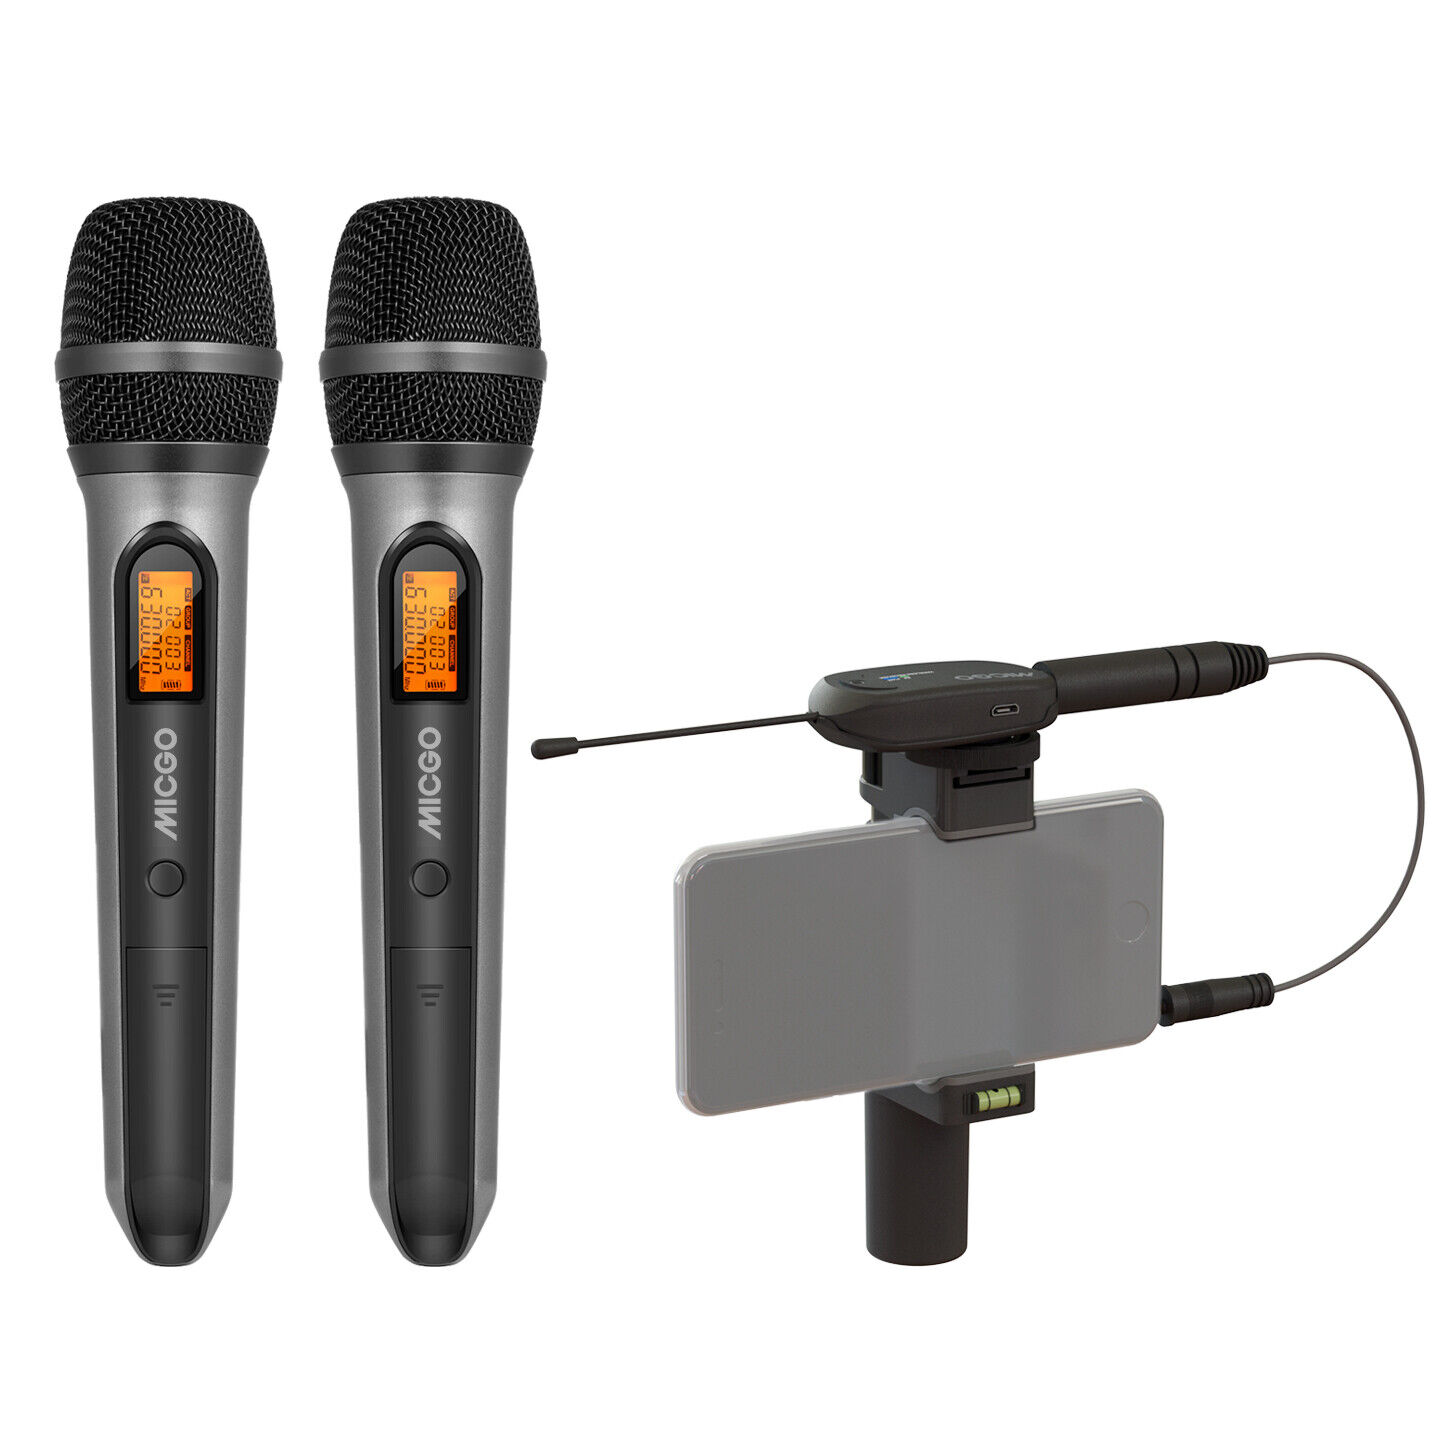 MICGO - Micrófono dual para celular y video cámaras